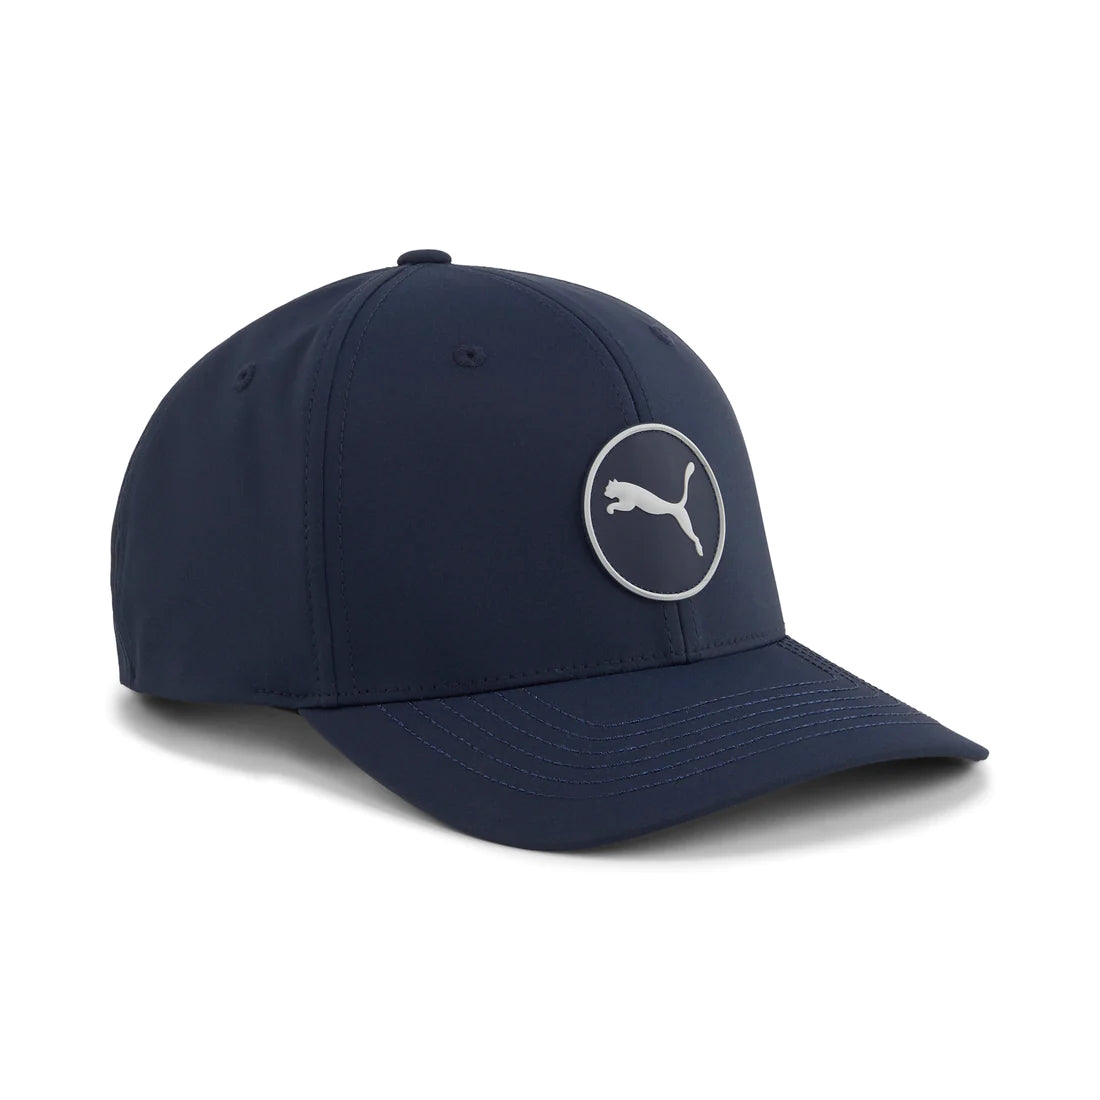 Puma Men's Circle Cat Tech Snapback Golf Hat